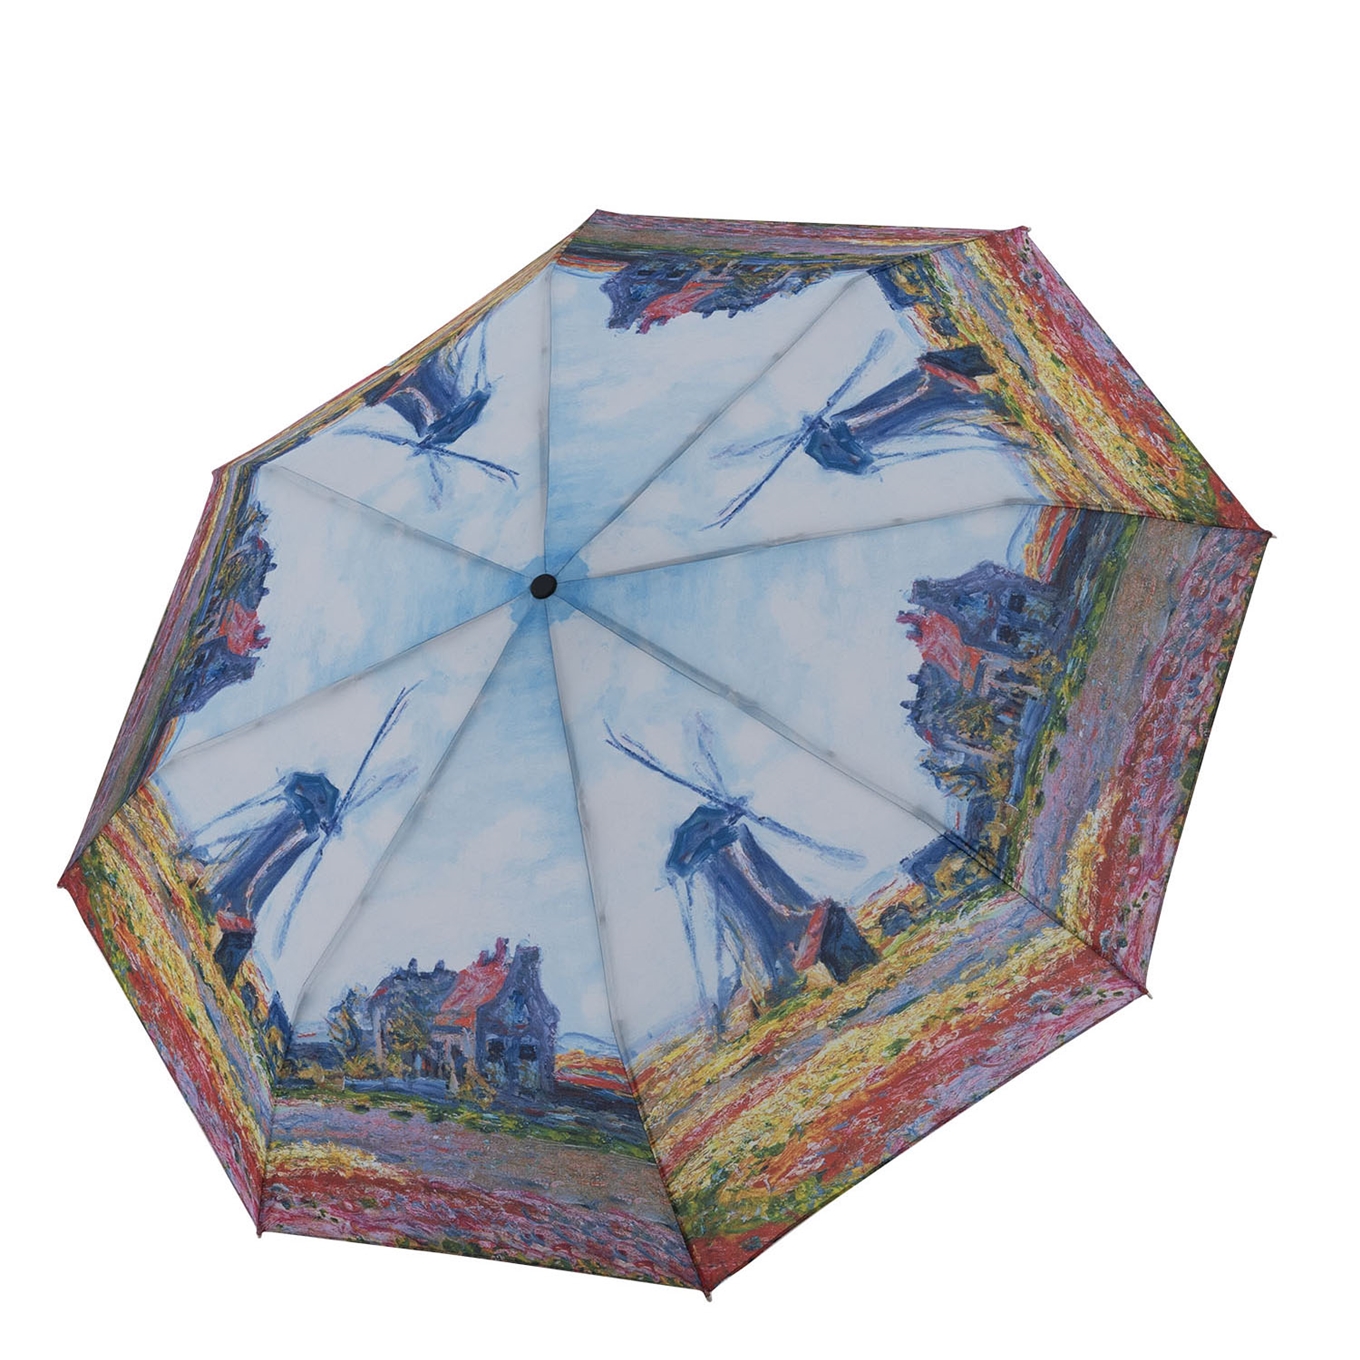 Doppler Art Collection Duomatic Monet De Windmolens multi (Storm) Paraplu